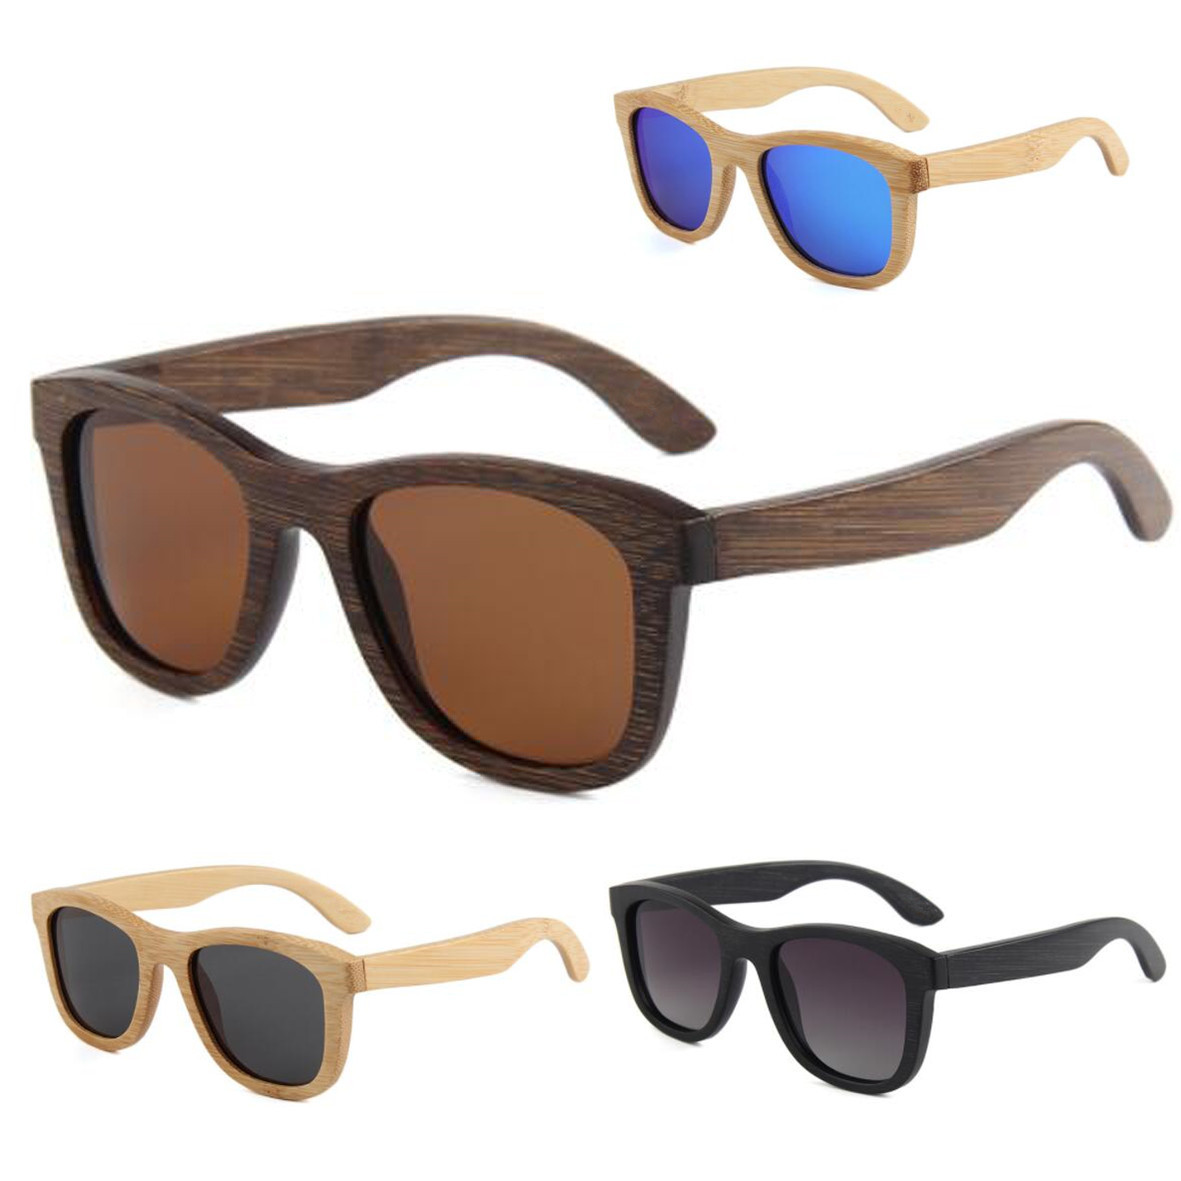 GL-ELY1126 100% Bamboo Sunglasses